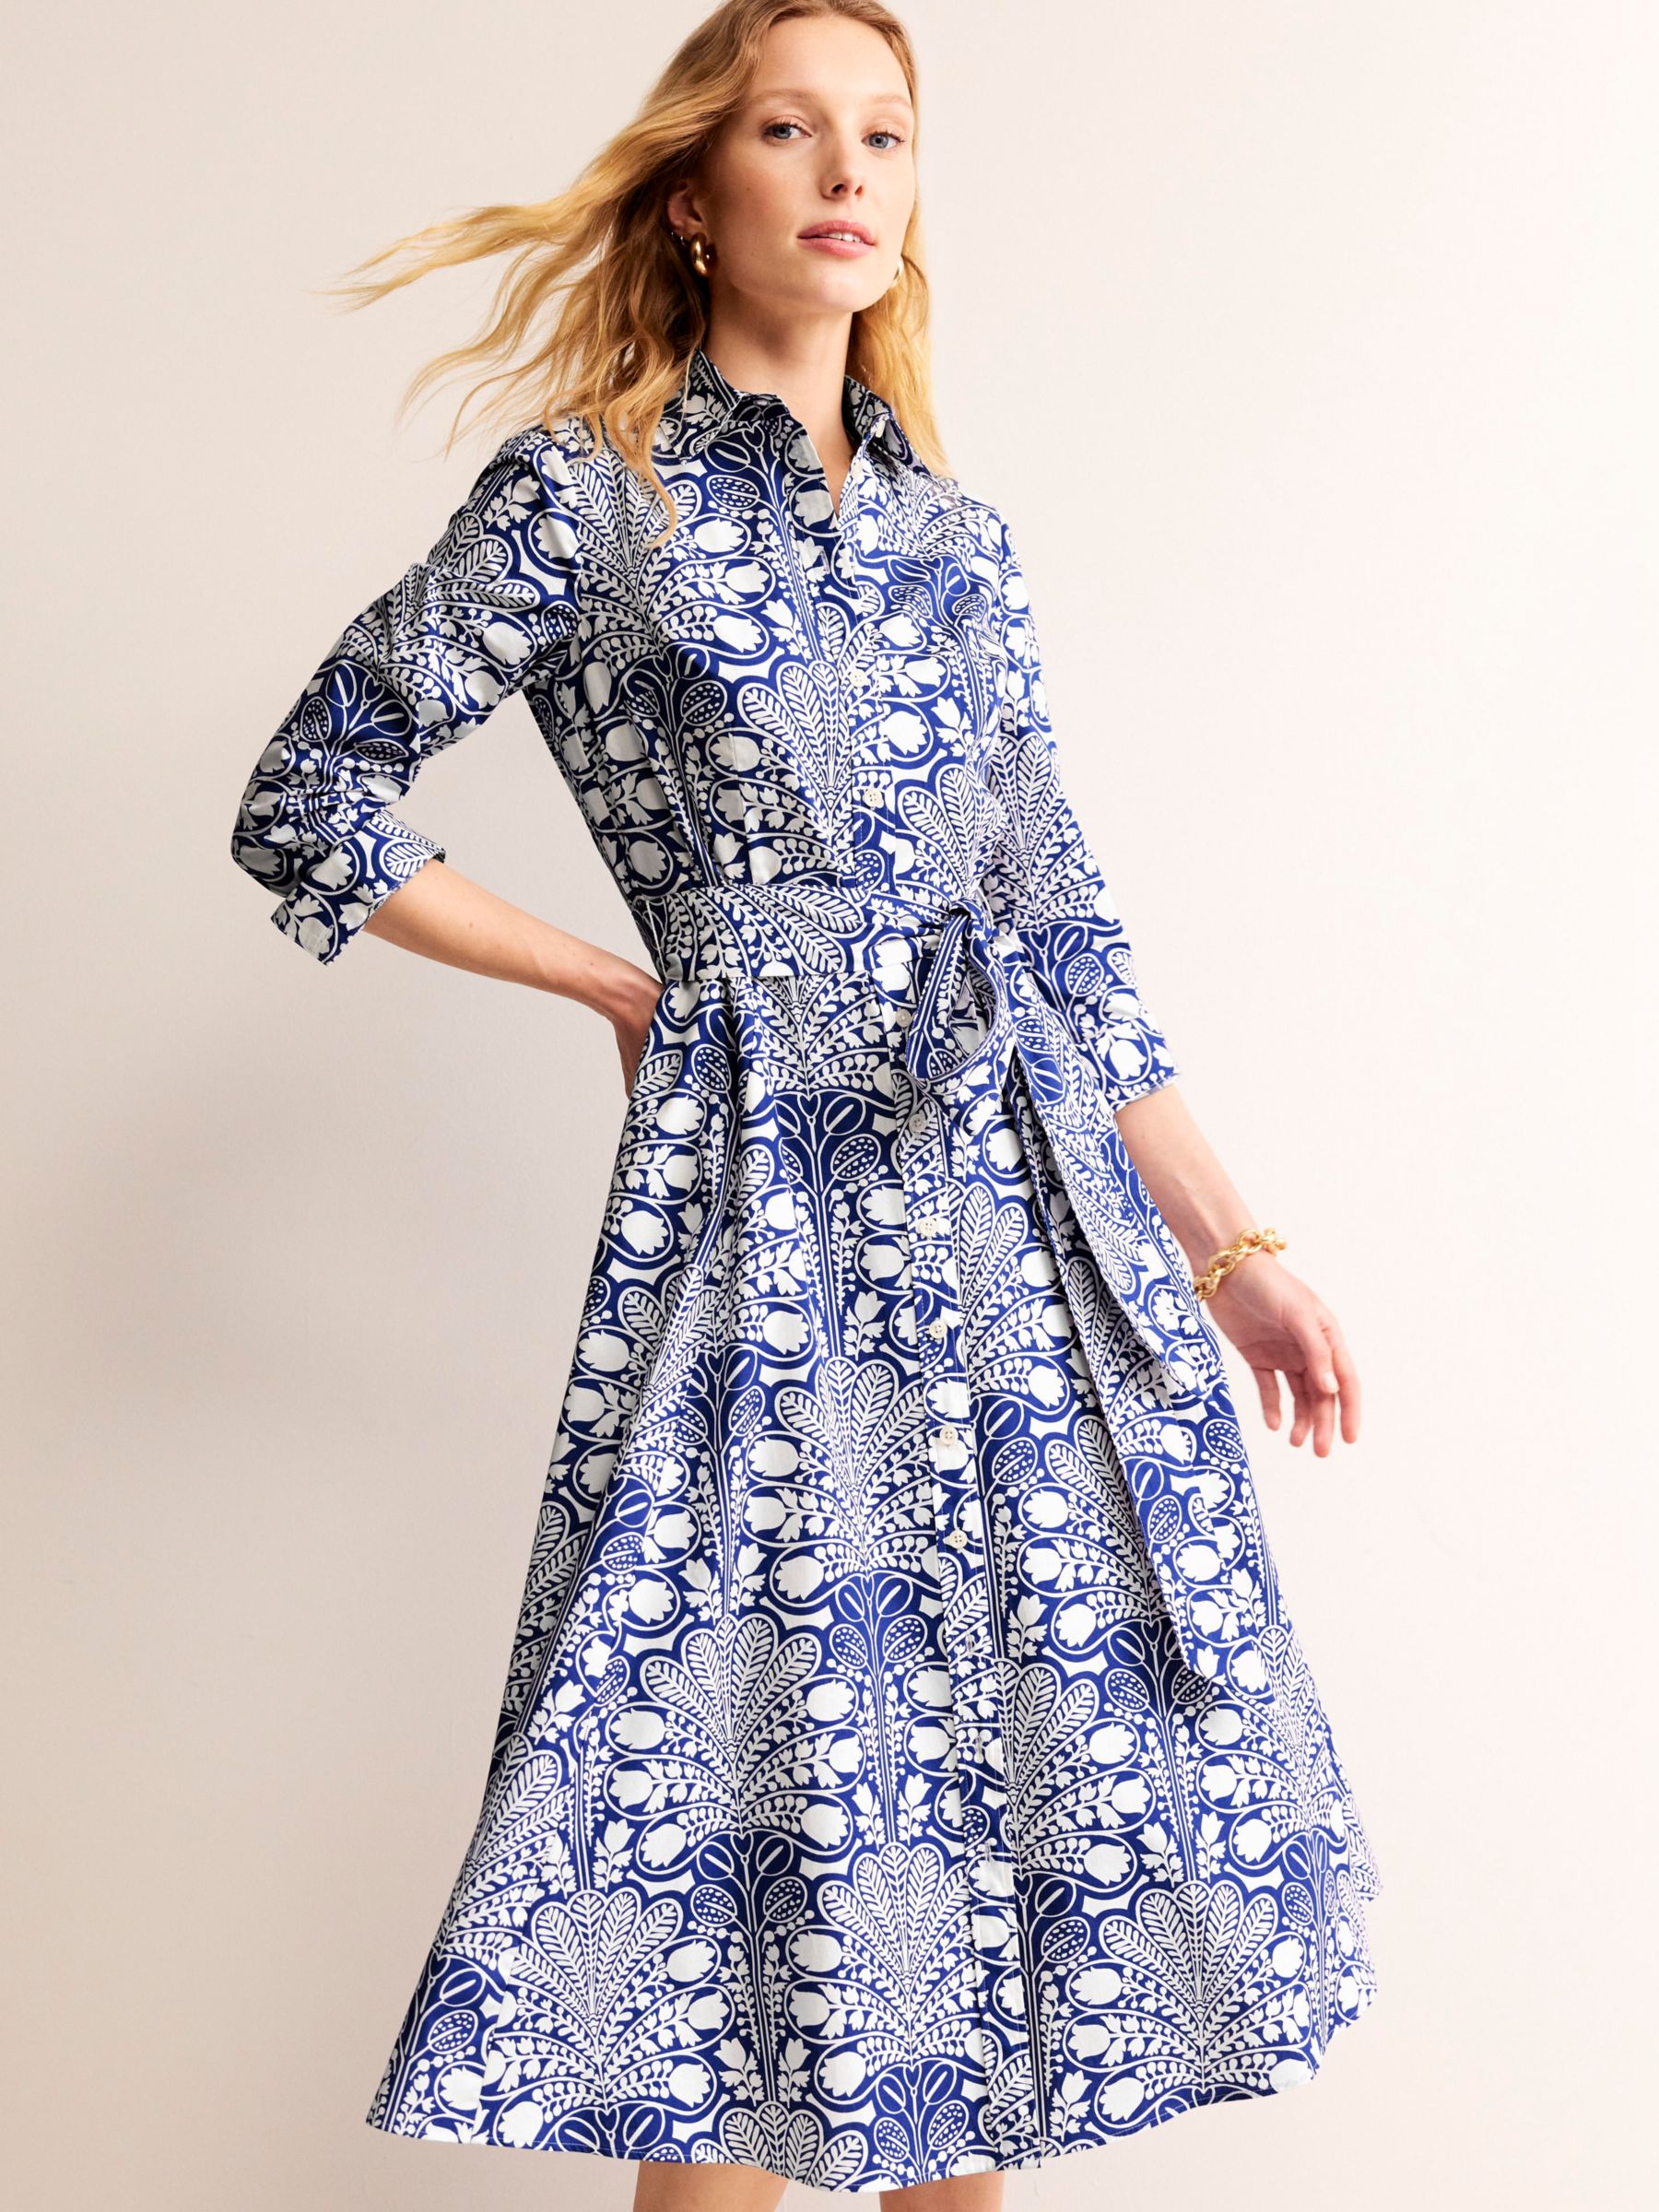 Boden Amy Floral Midi Cotton Shirt Dress, Blue/White, 8